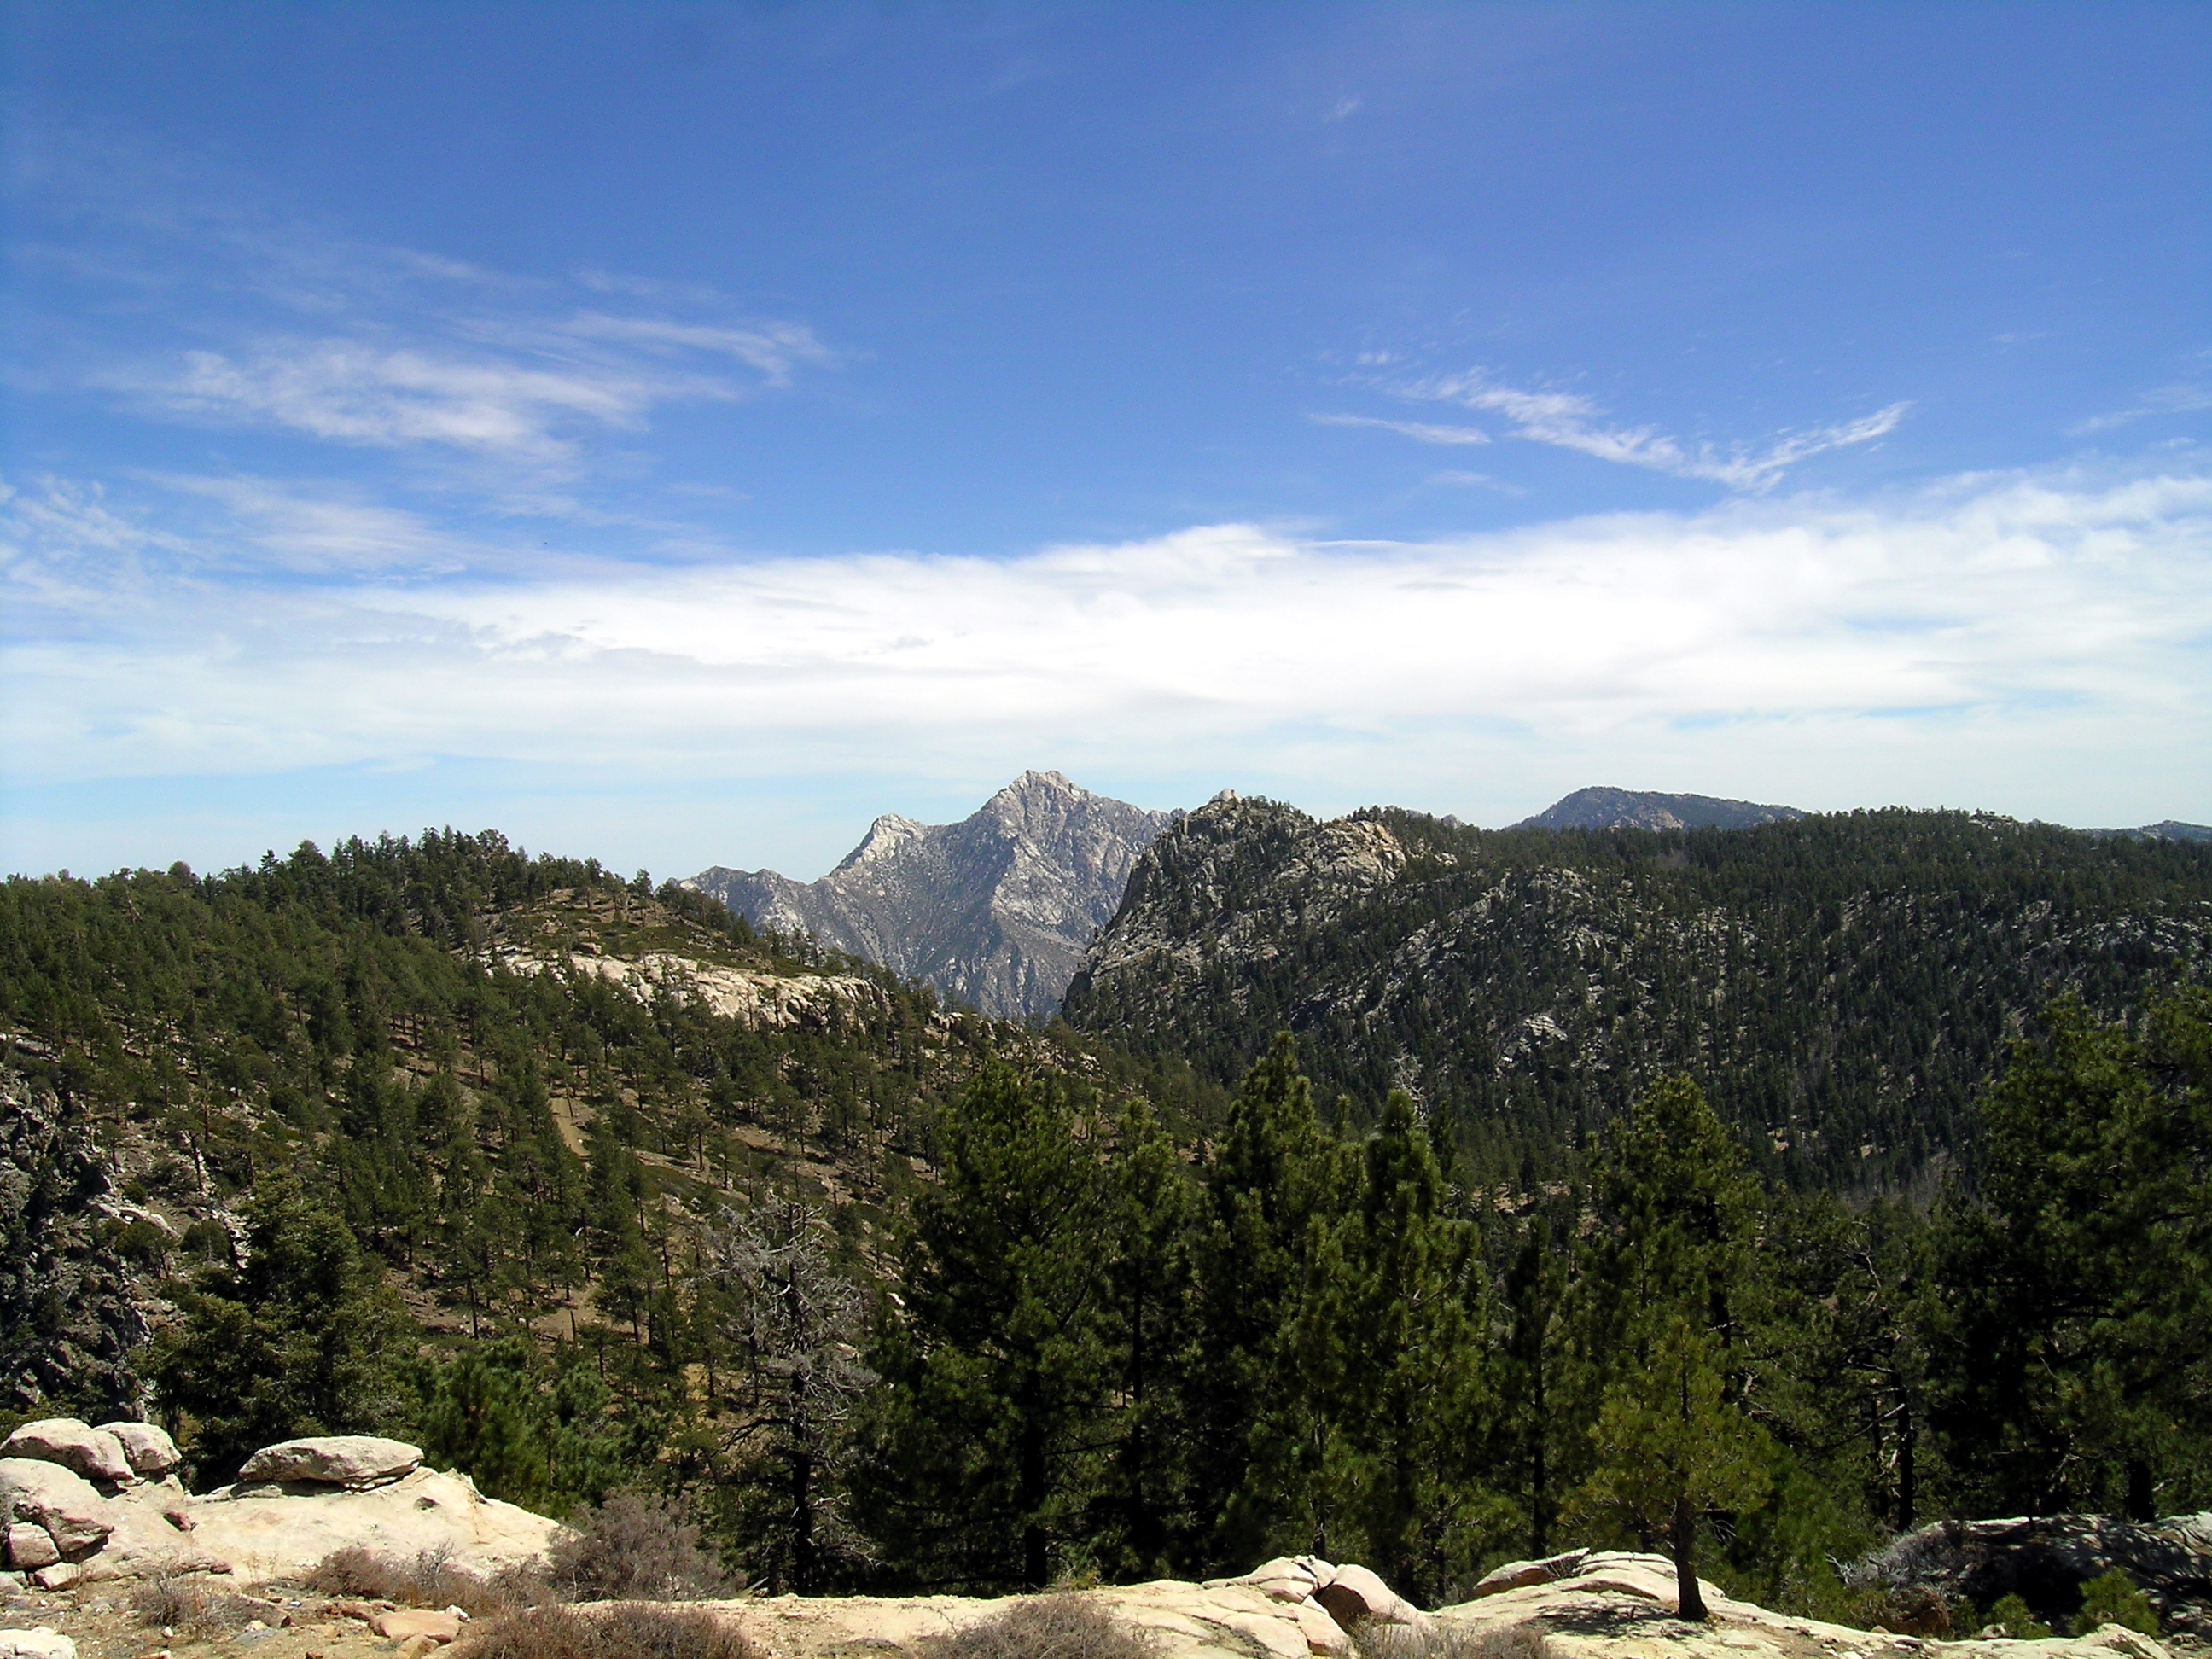 http://upload.wikimedia.org/wikipedia/commons/6/61/Devils-Peak_Sierra-SanPedroMartir_BajaCalifornia_Mexico.jpg